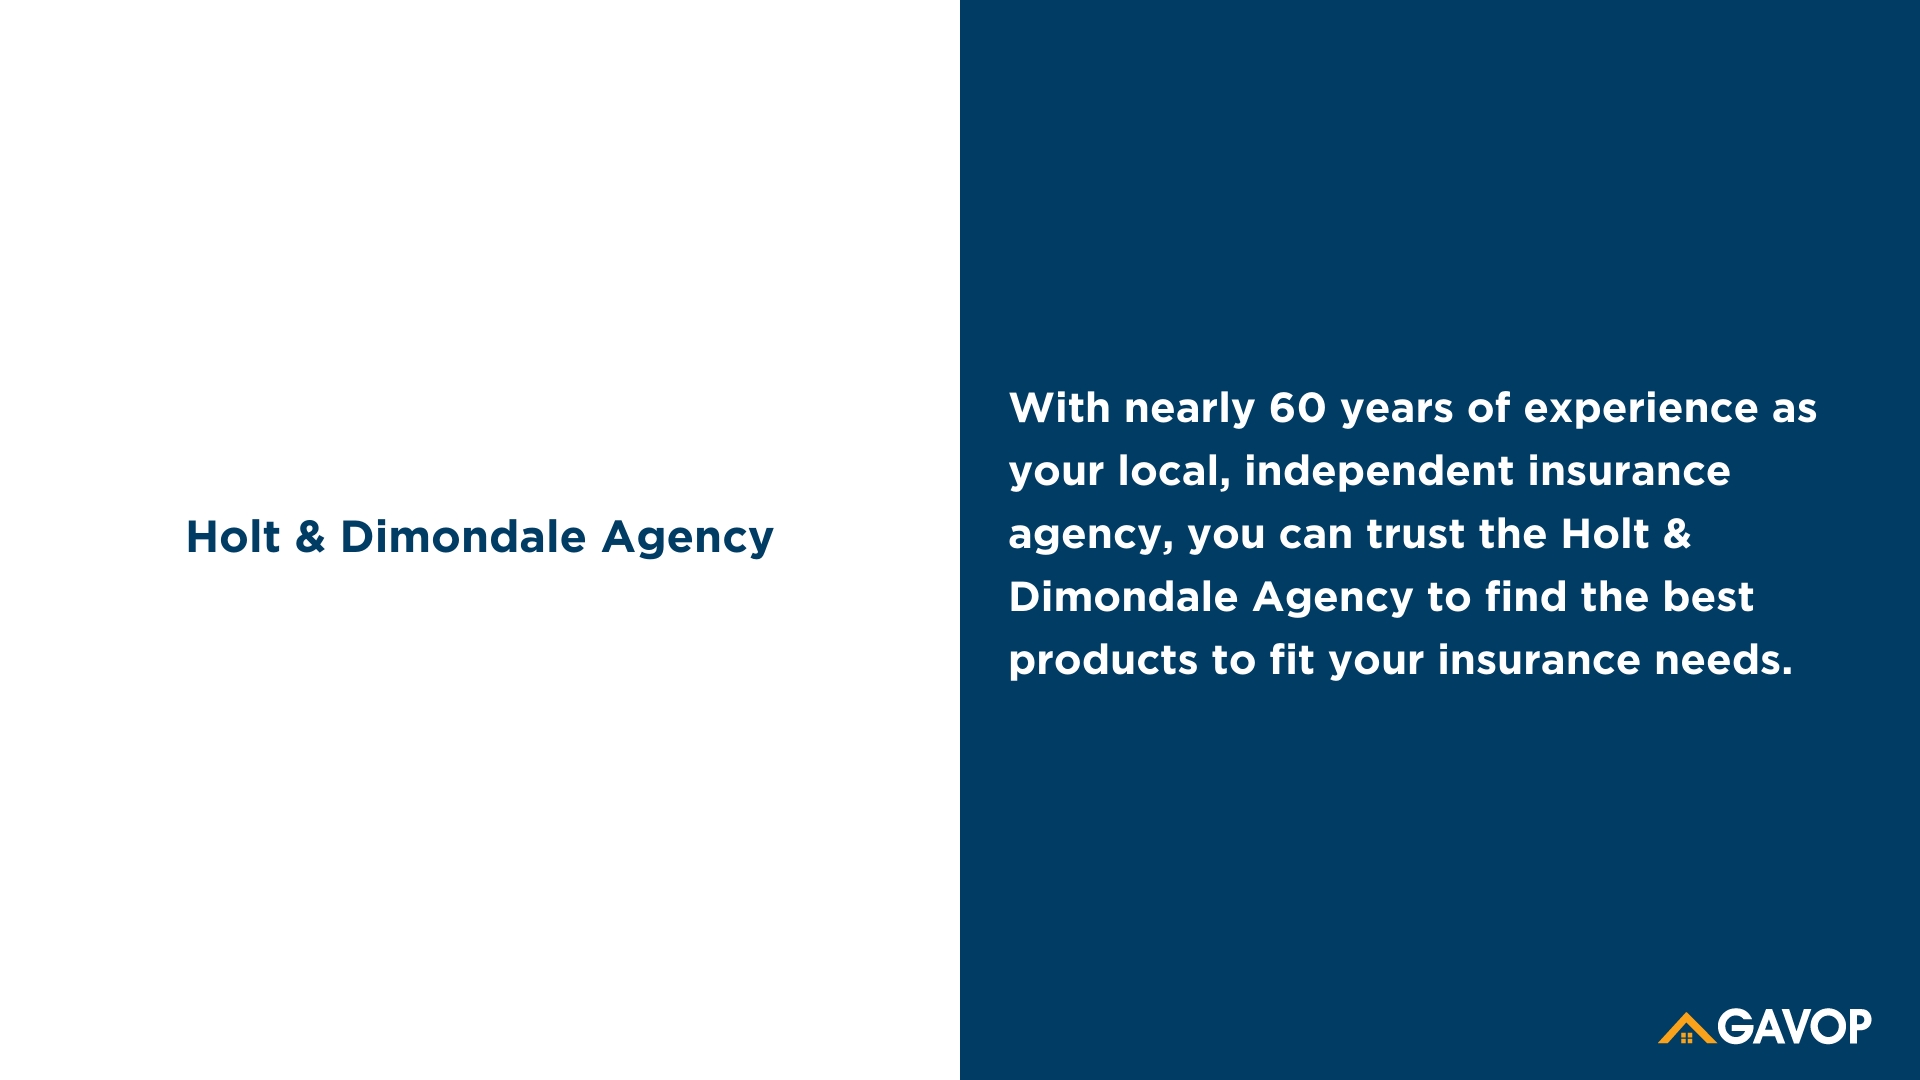 Holt & Dimondale Agency